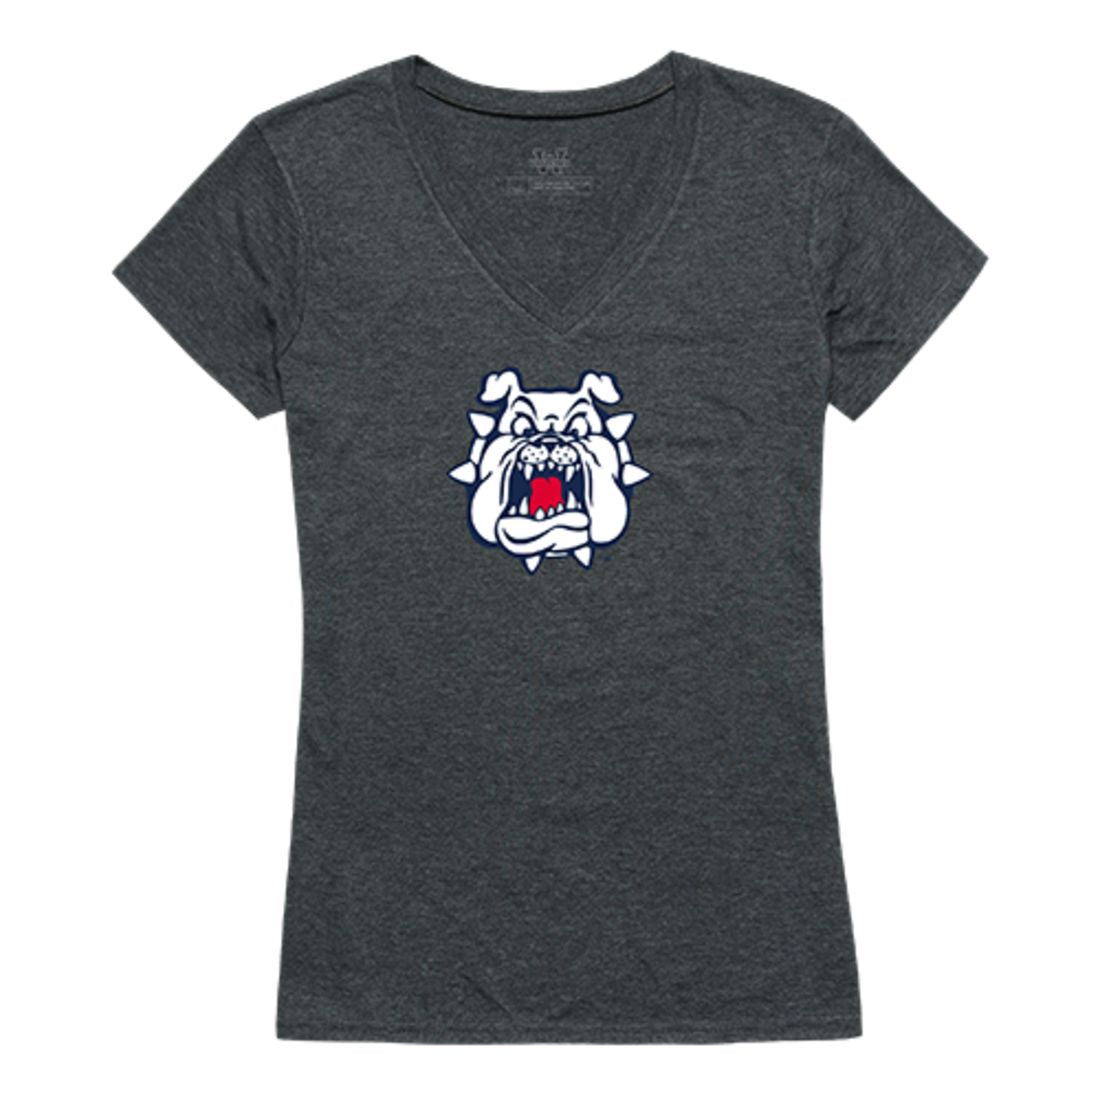 Fresno State University Bulldogs Womens Cinder T-Shirt